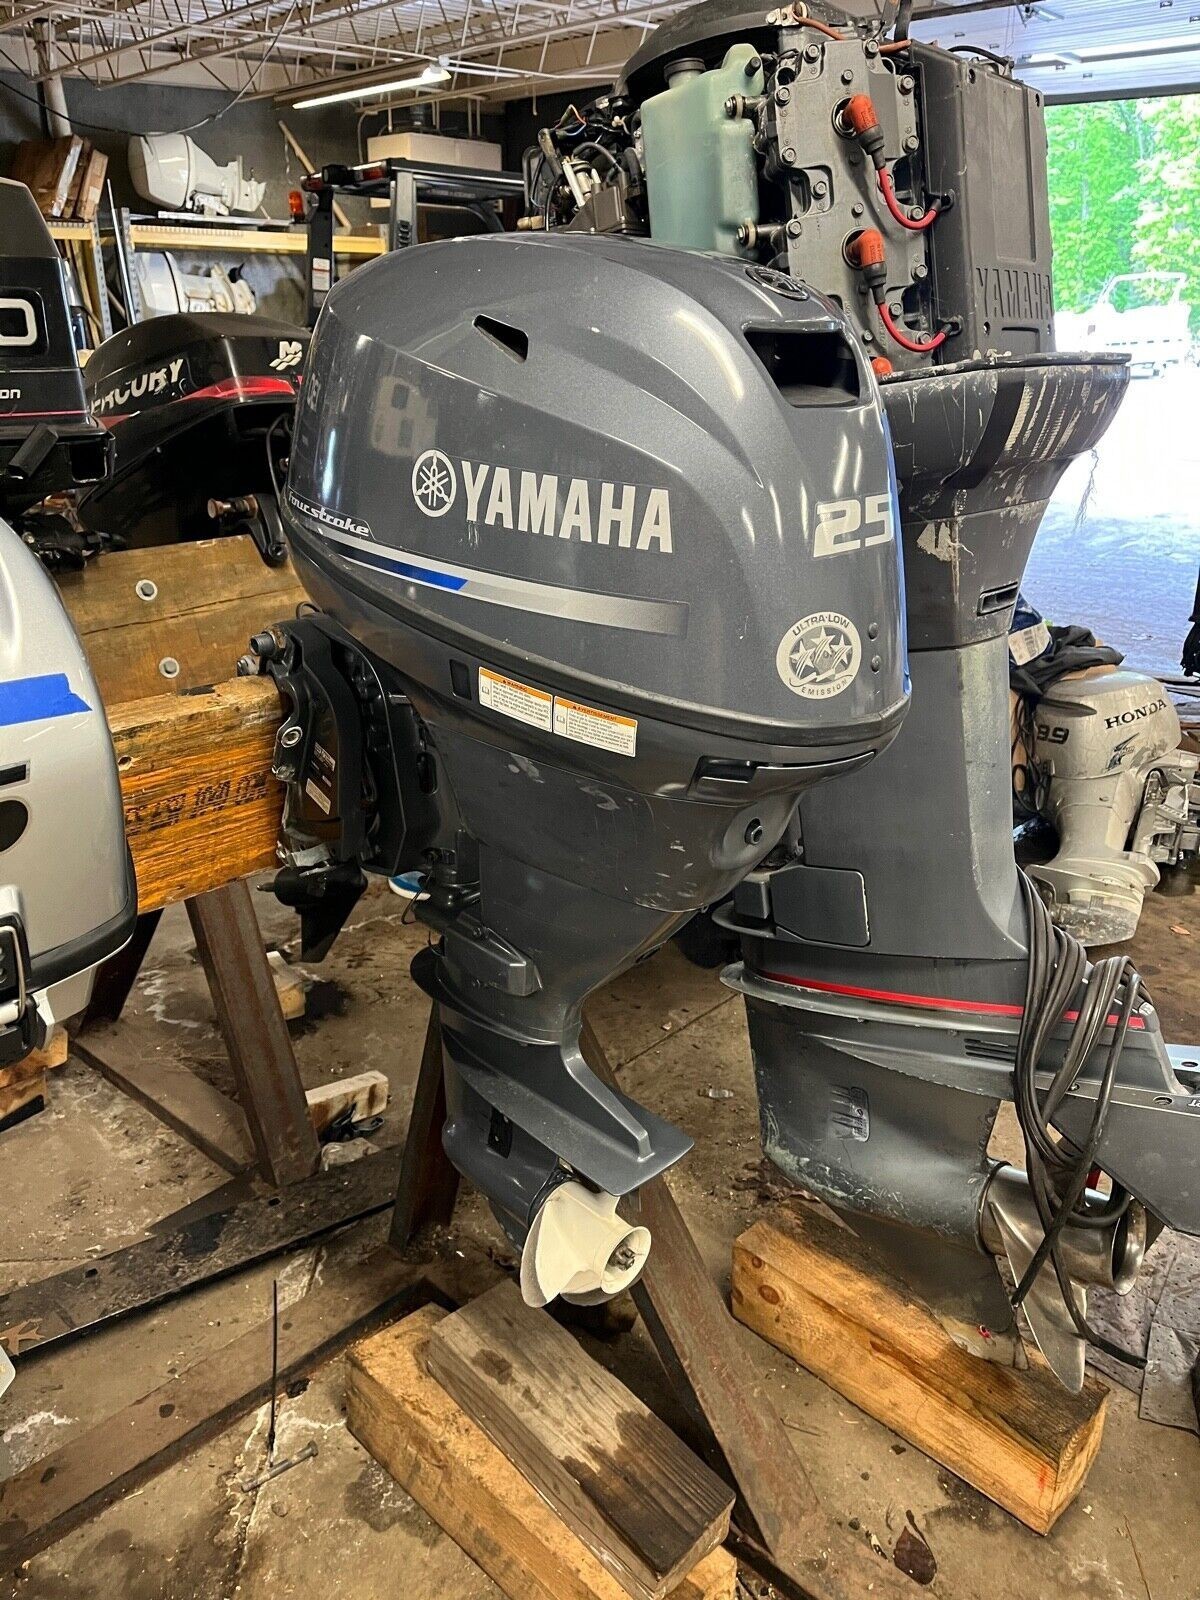 2020 suzuki 150 20” outboard boat engine motor Df150atl Yamaha Honda M